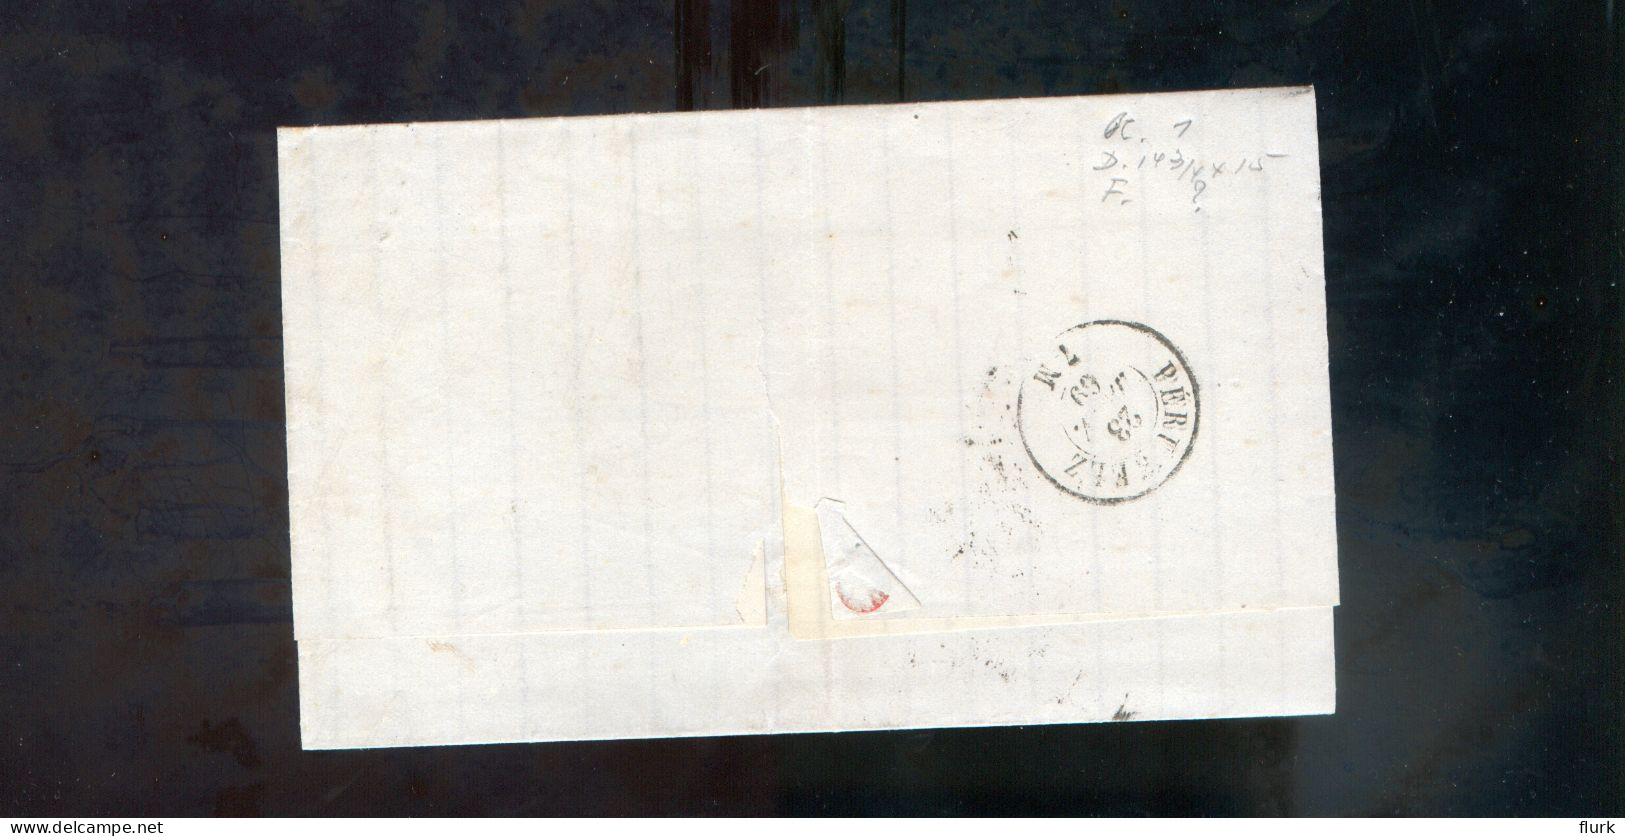 België OCB18 Gestempeld Op Brief Gand-Péruwelz 1869 Perfect (2 Scans) - 1865-1866 Linksprofil